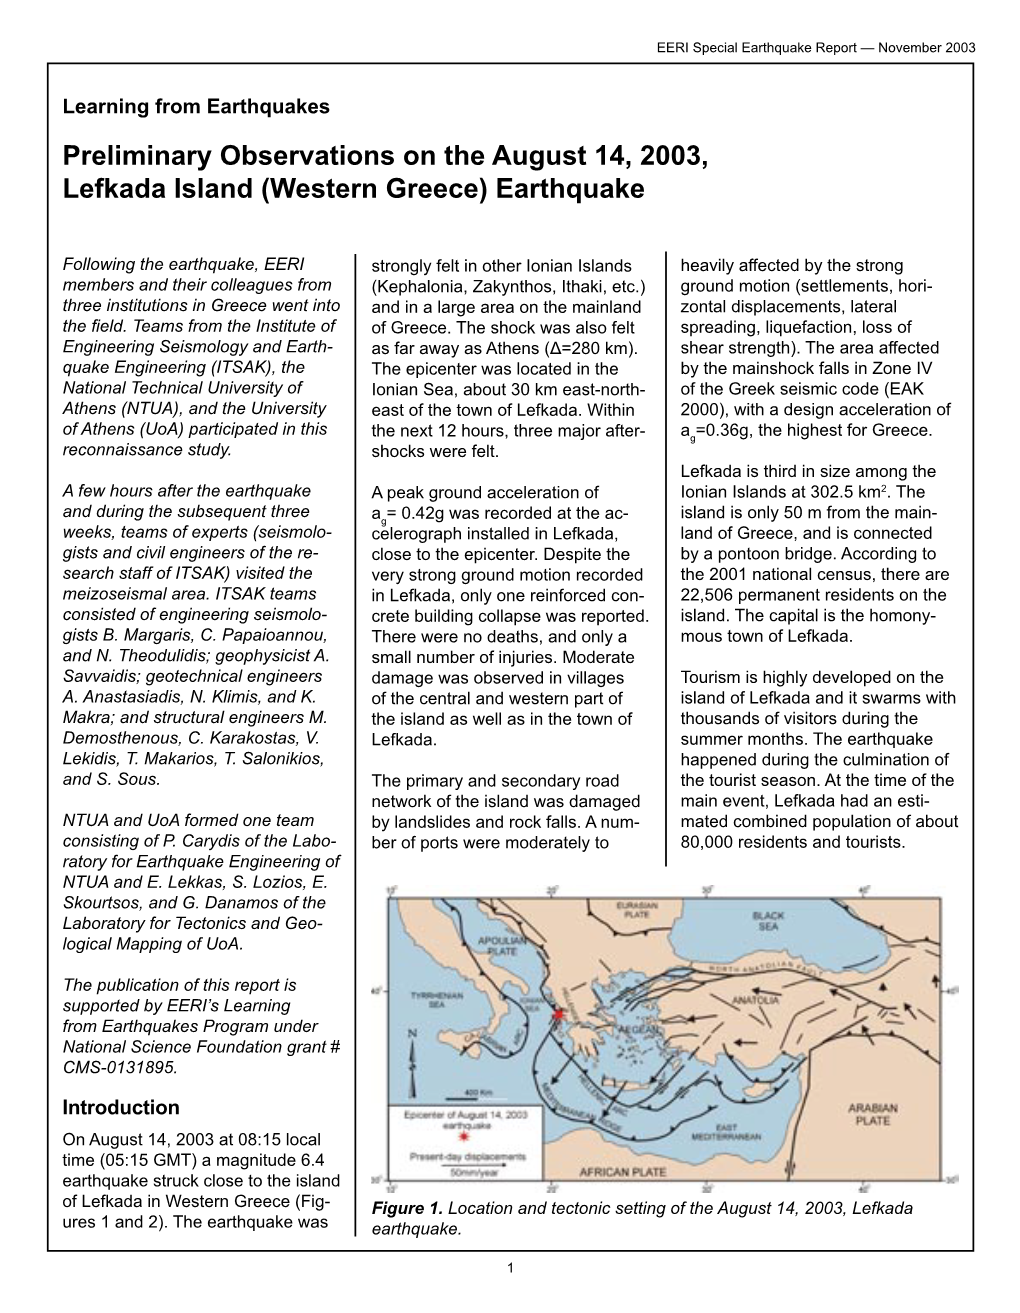 Preliminary Observations on the August 14, 2003, Lefkada Island (Western Greece) Earthquake